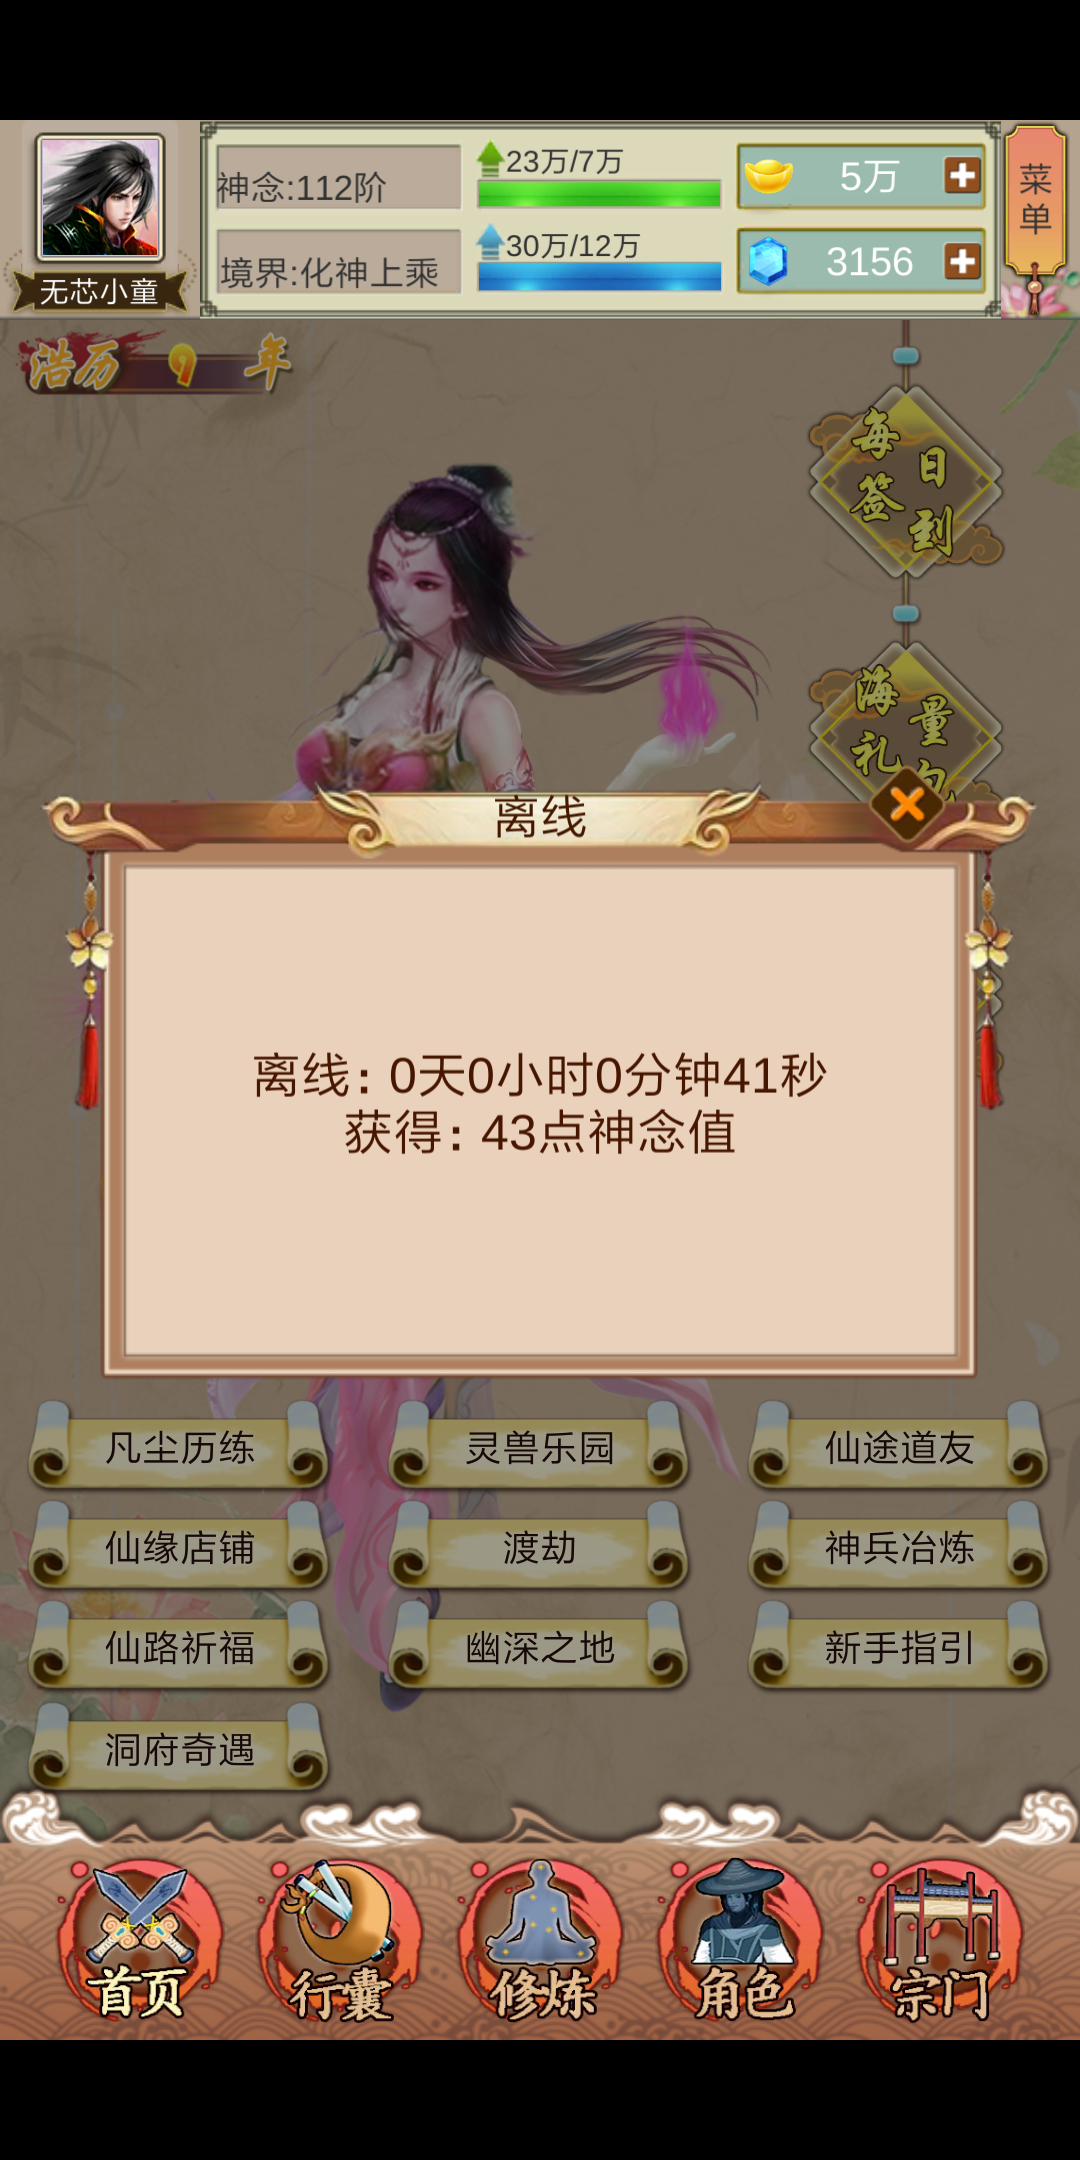 Screenshot 1 of Xianxia သီအိုရီ 1.0